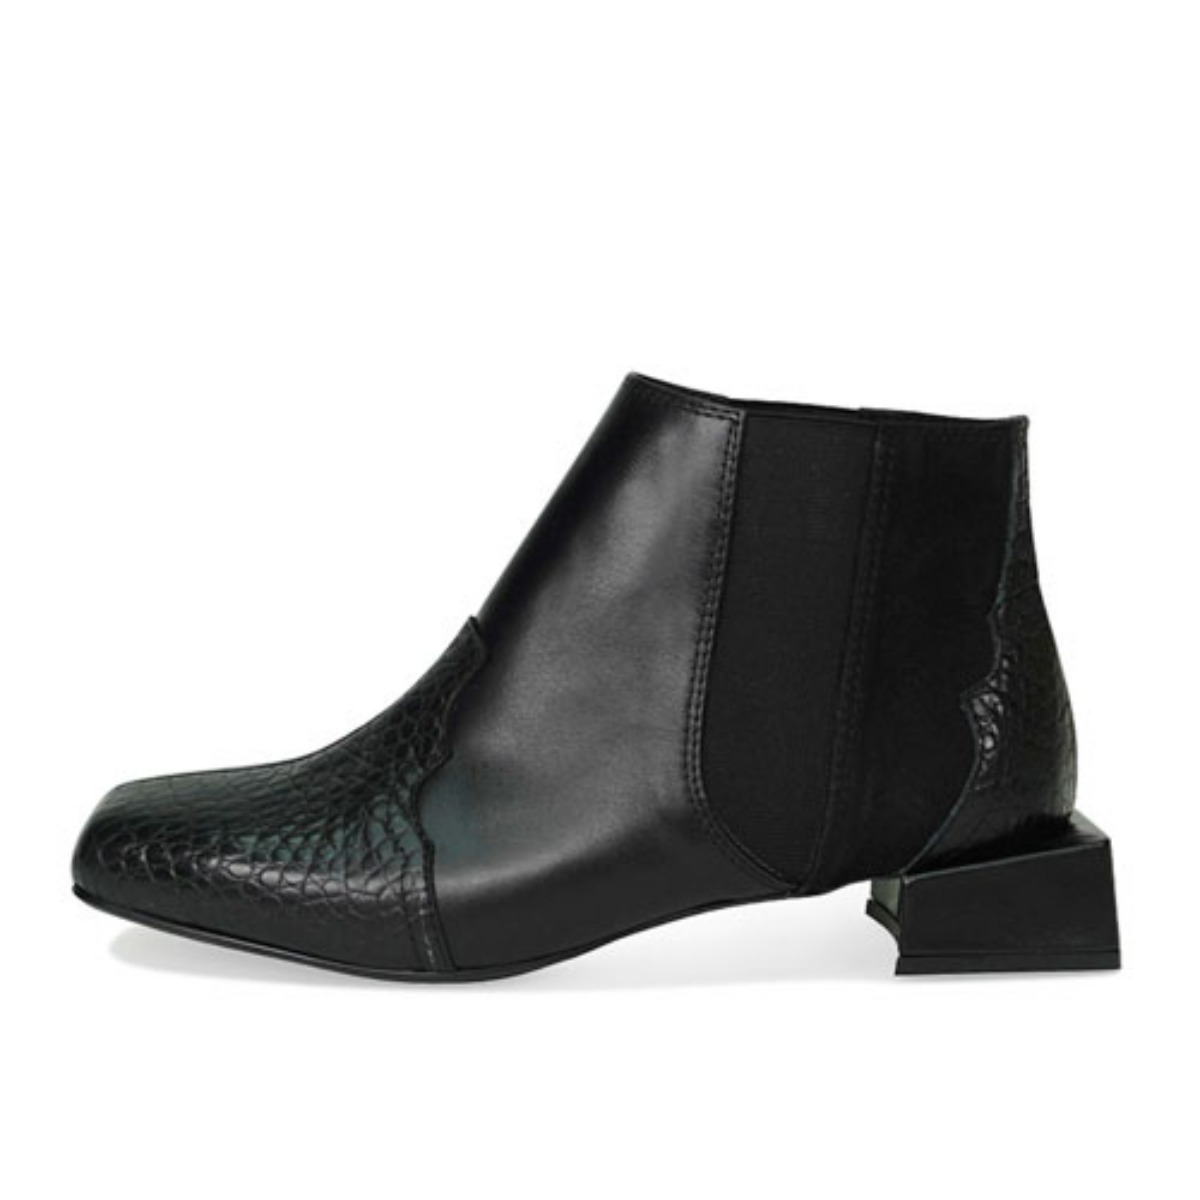 ORRO Chelsea Boots (Black)